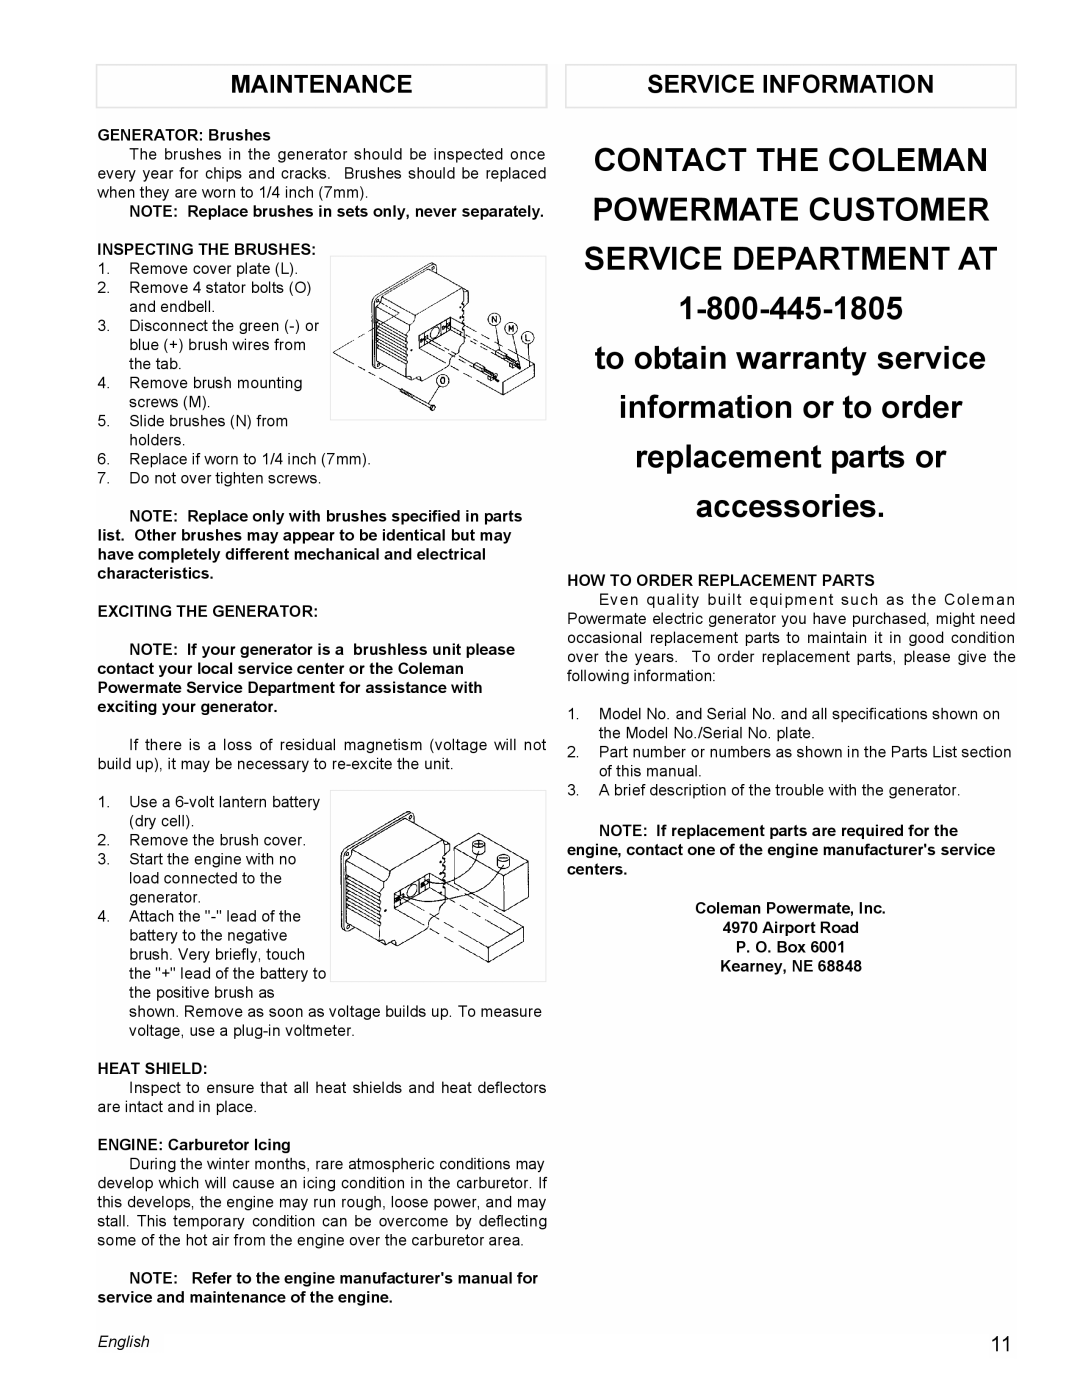 Powermate PM0478022, PL0473503, PM0473503, PM0477022, PM0474203, PM0475003, PM0477023, PC0473503 manual to obtain warranty service 